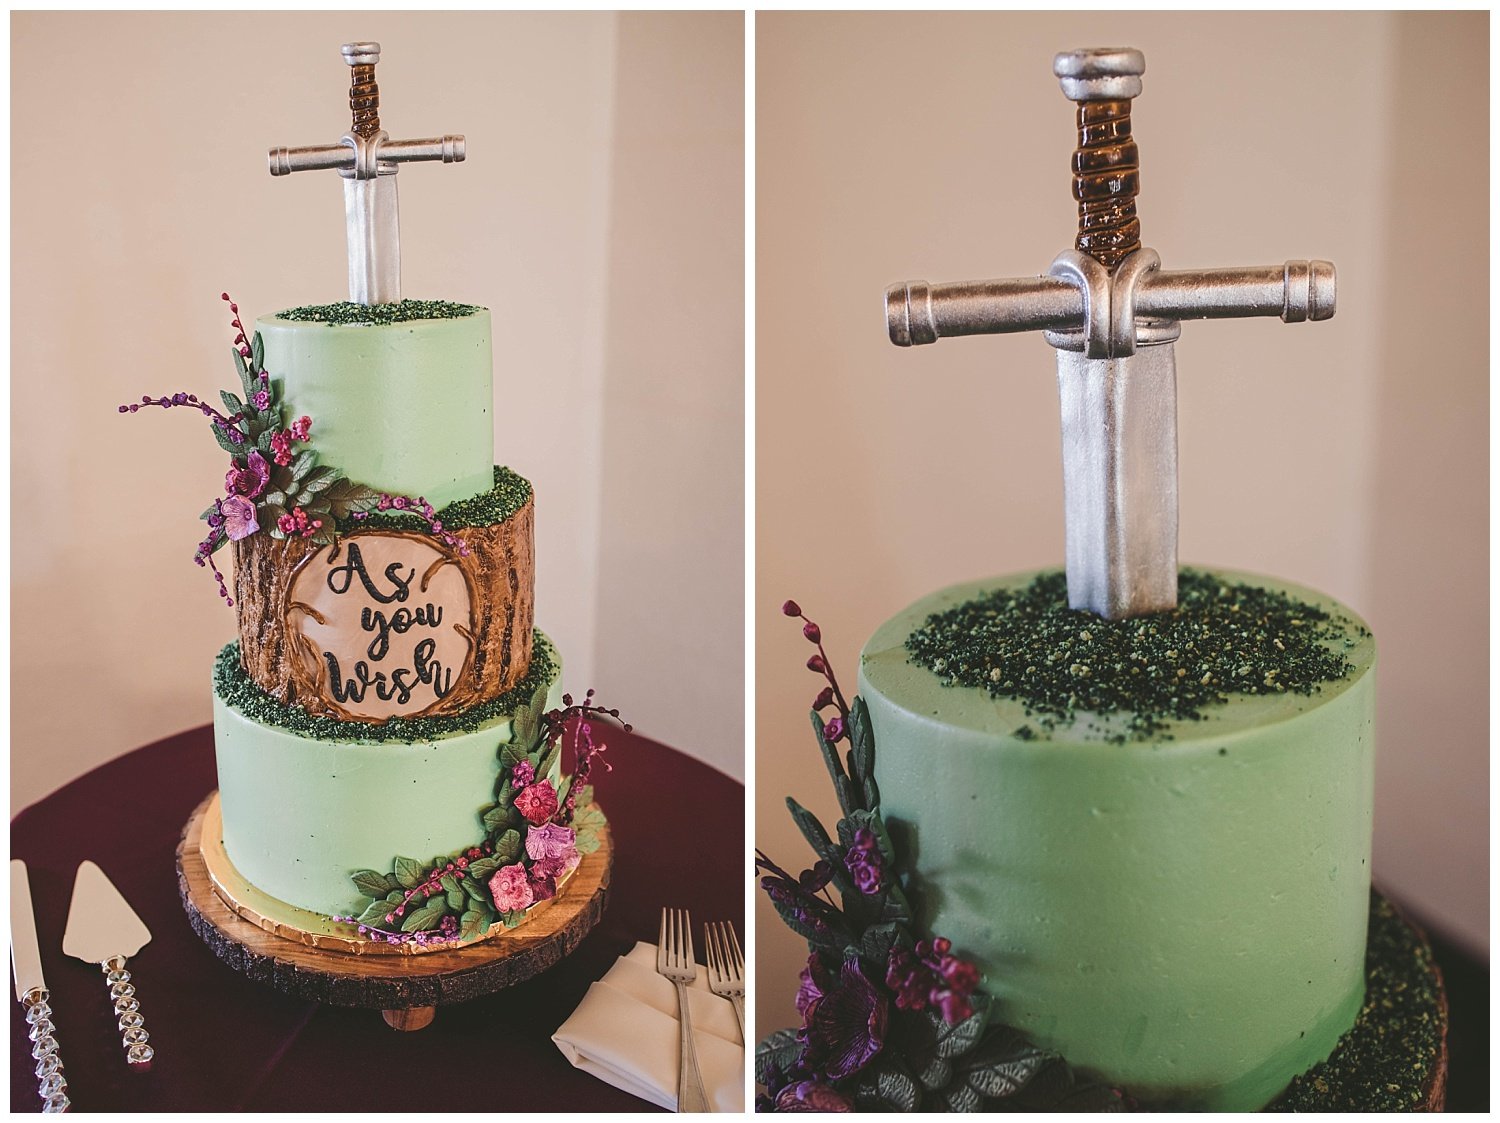 The Princess Bride Themed Wedding Cake